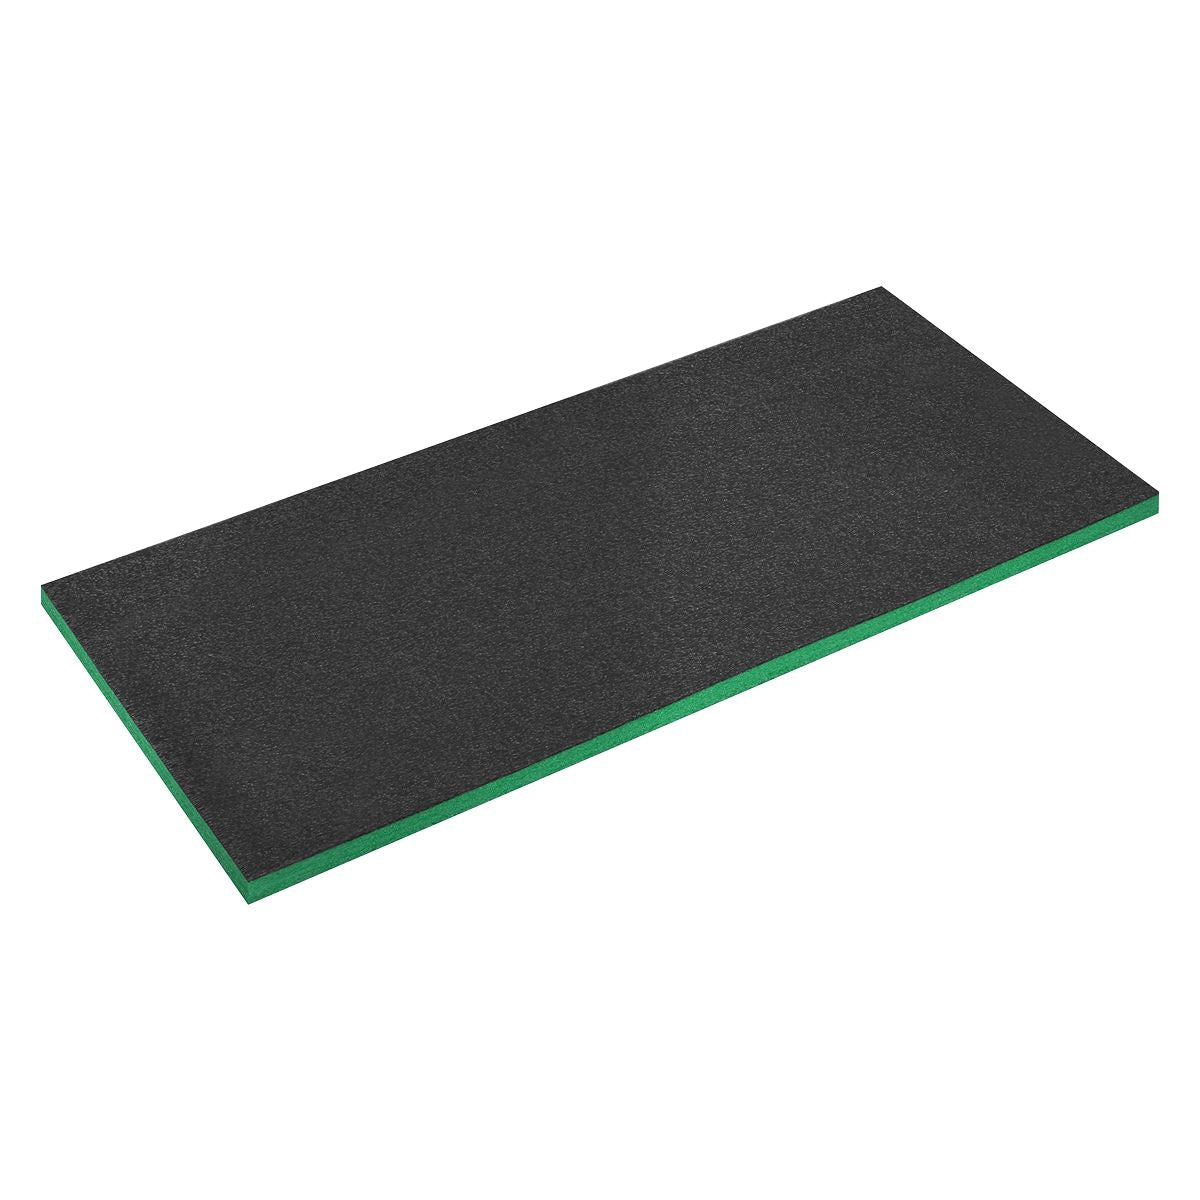 Sealey Easy Peel Shadow Foam Green Black 1200 x 550 x 30mm Tool Tray Insert